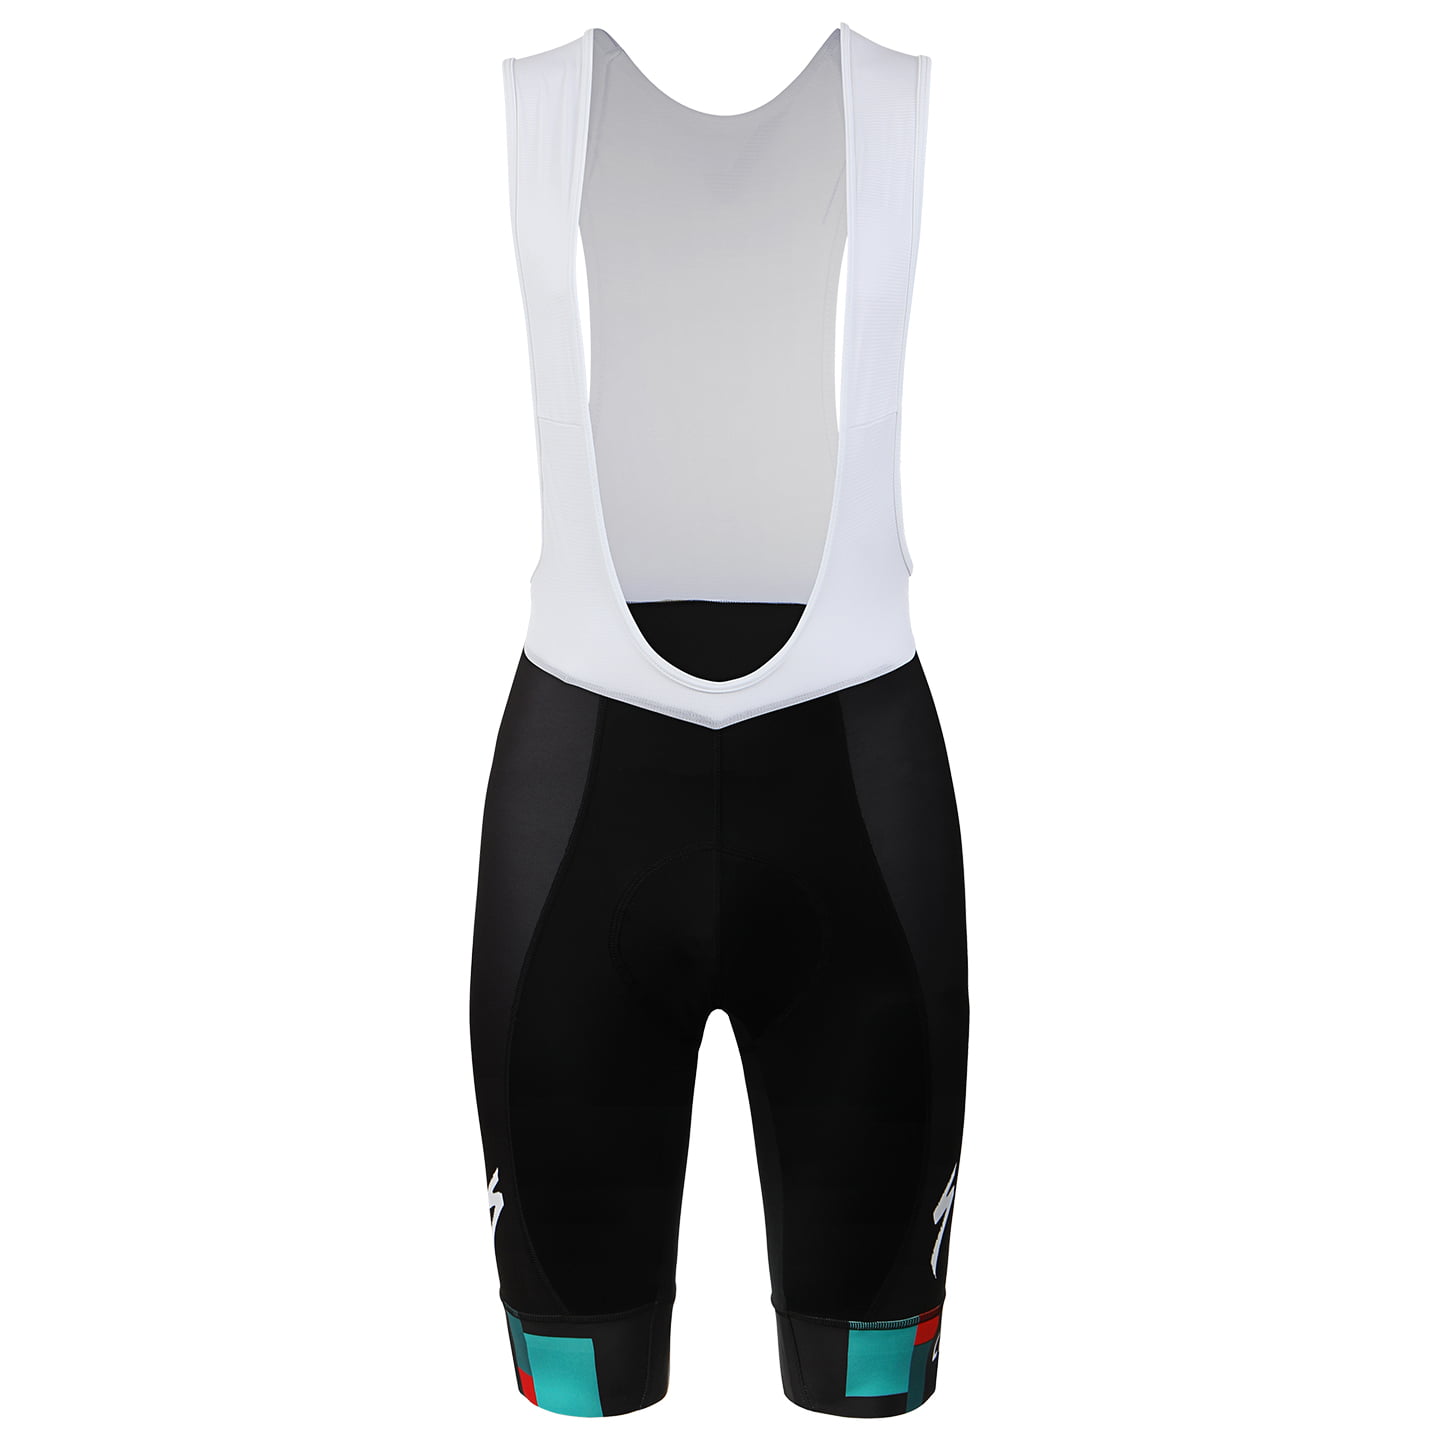 BORA-hansgrohe Race 2022 Bib Shorts, for men, size L, Cycle shorts, Cycling clothing